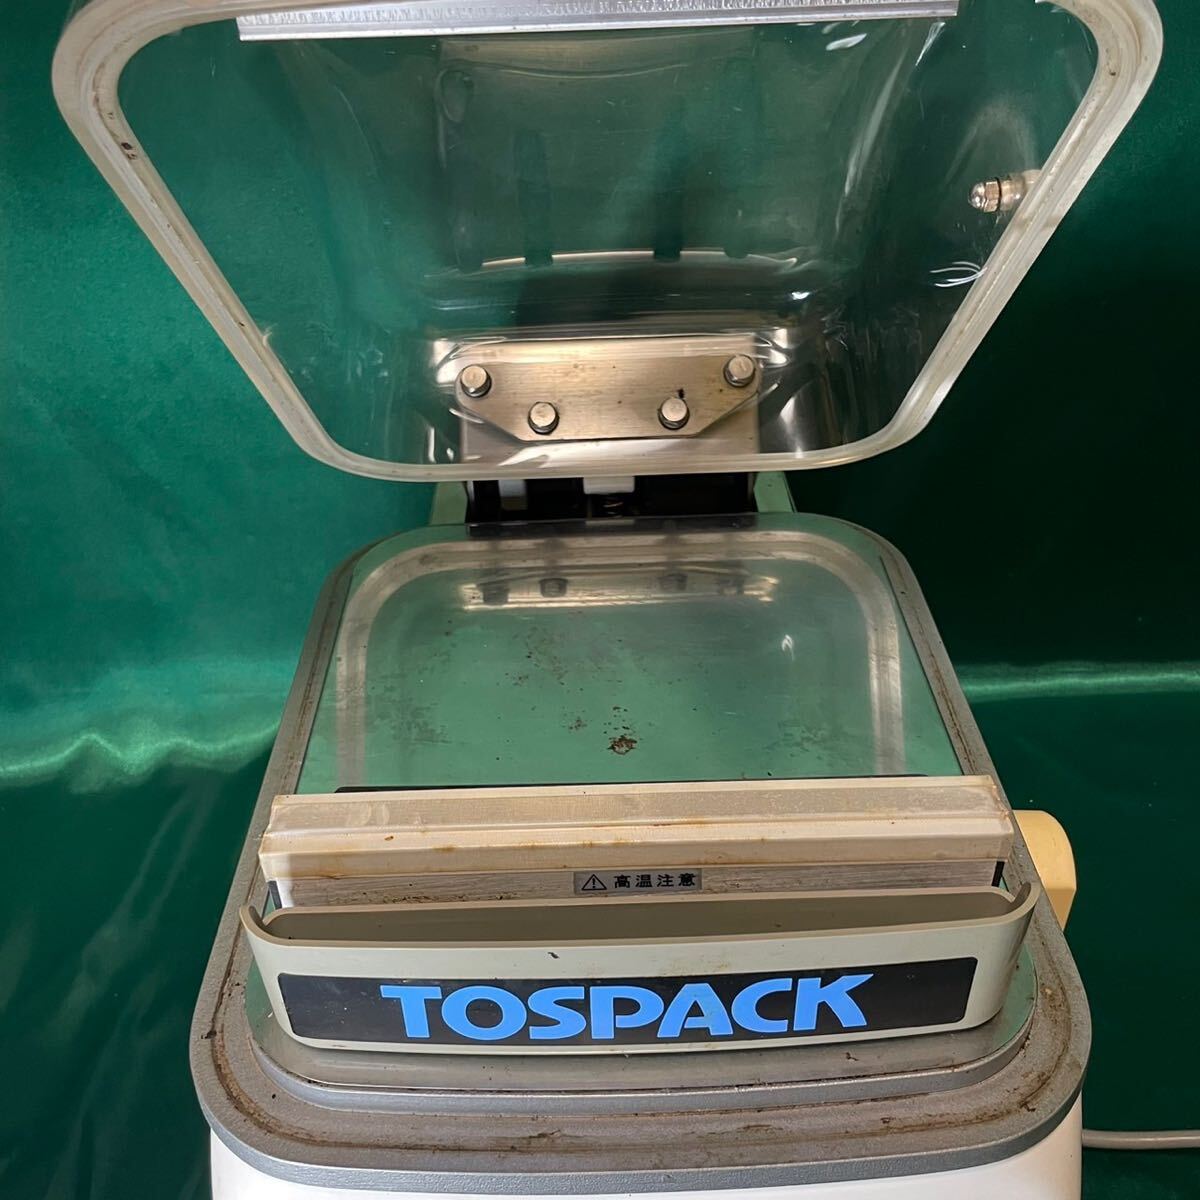 TOSEI 東静電気 V-280 自動真空包装機 TOSPACK 2002年製 トスパック 個包装 真空パック 飲食店 店舗 業務用の画像4